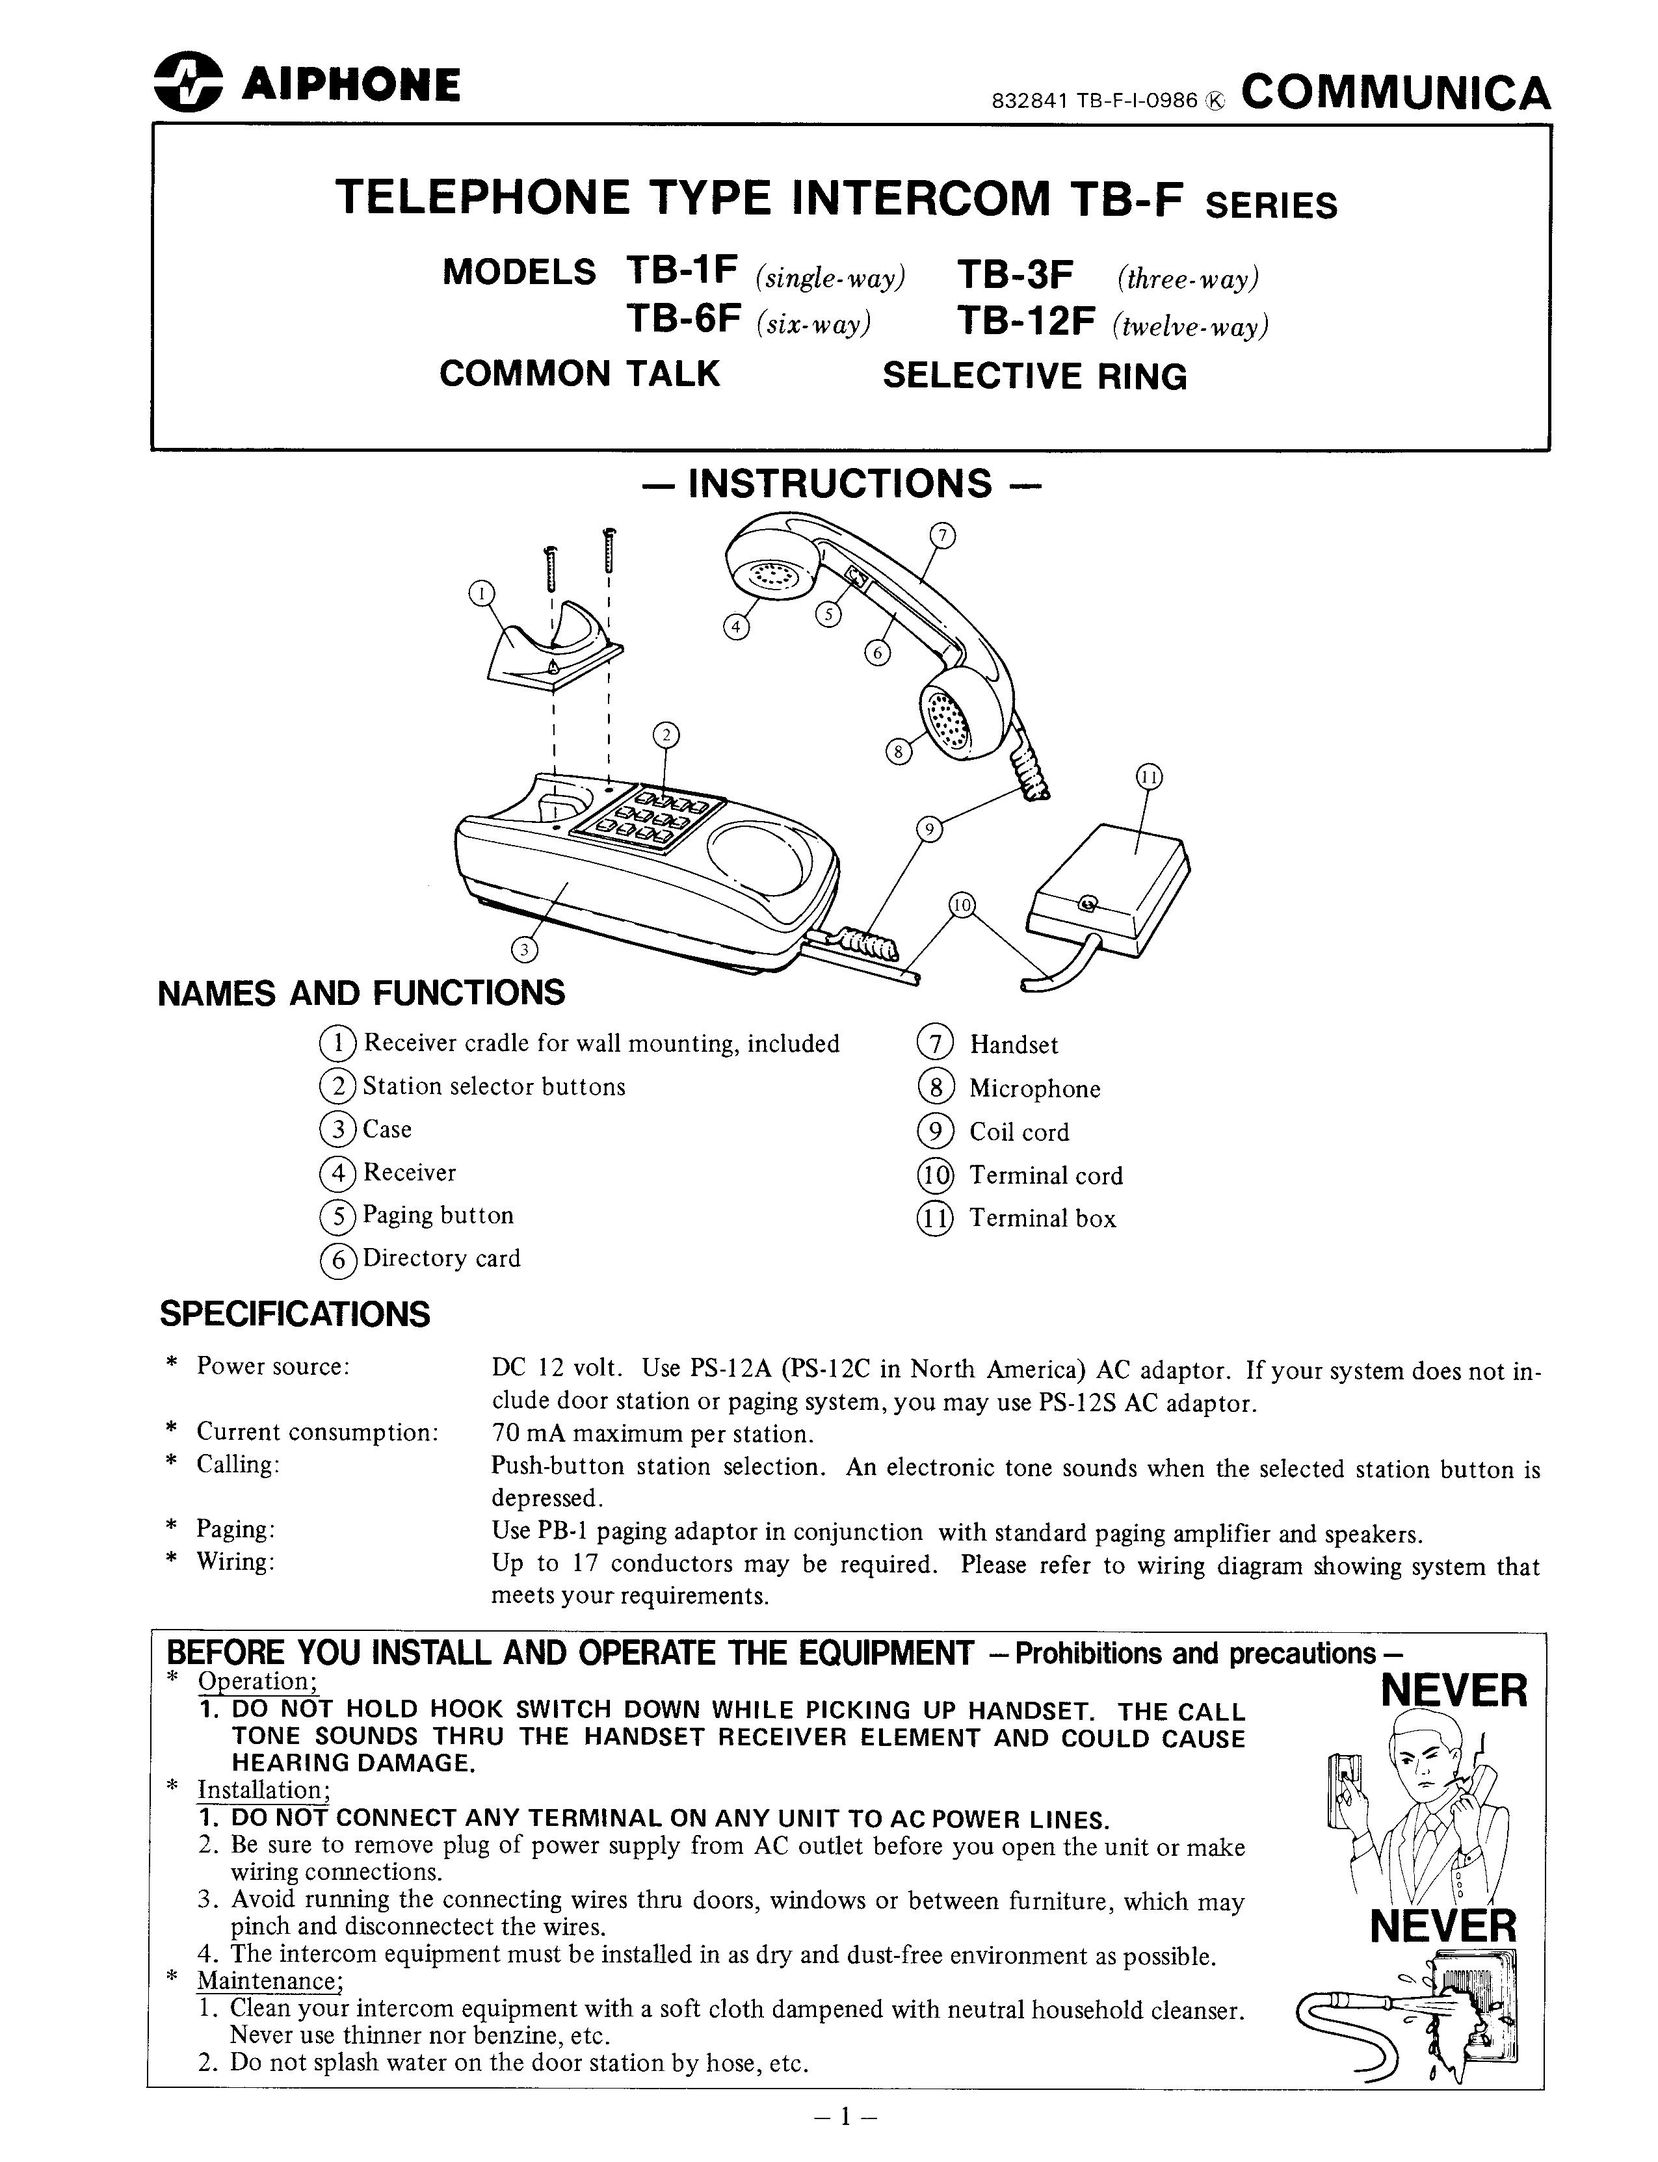 Aiphone TB-12F Telephone User Manual